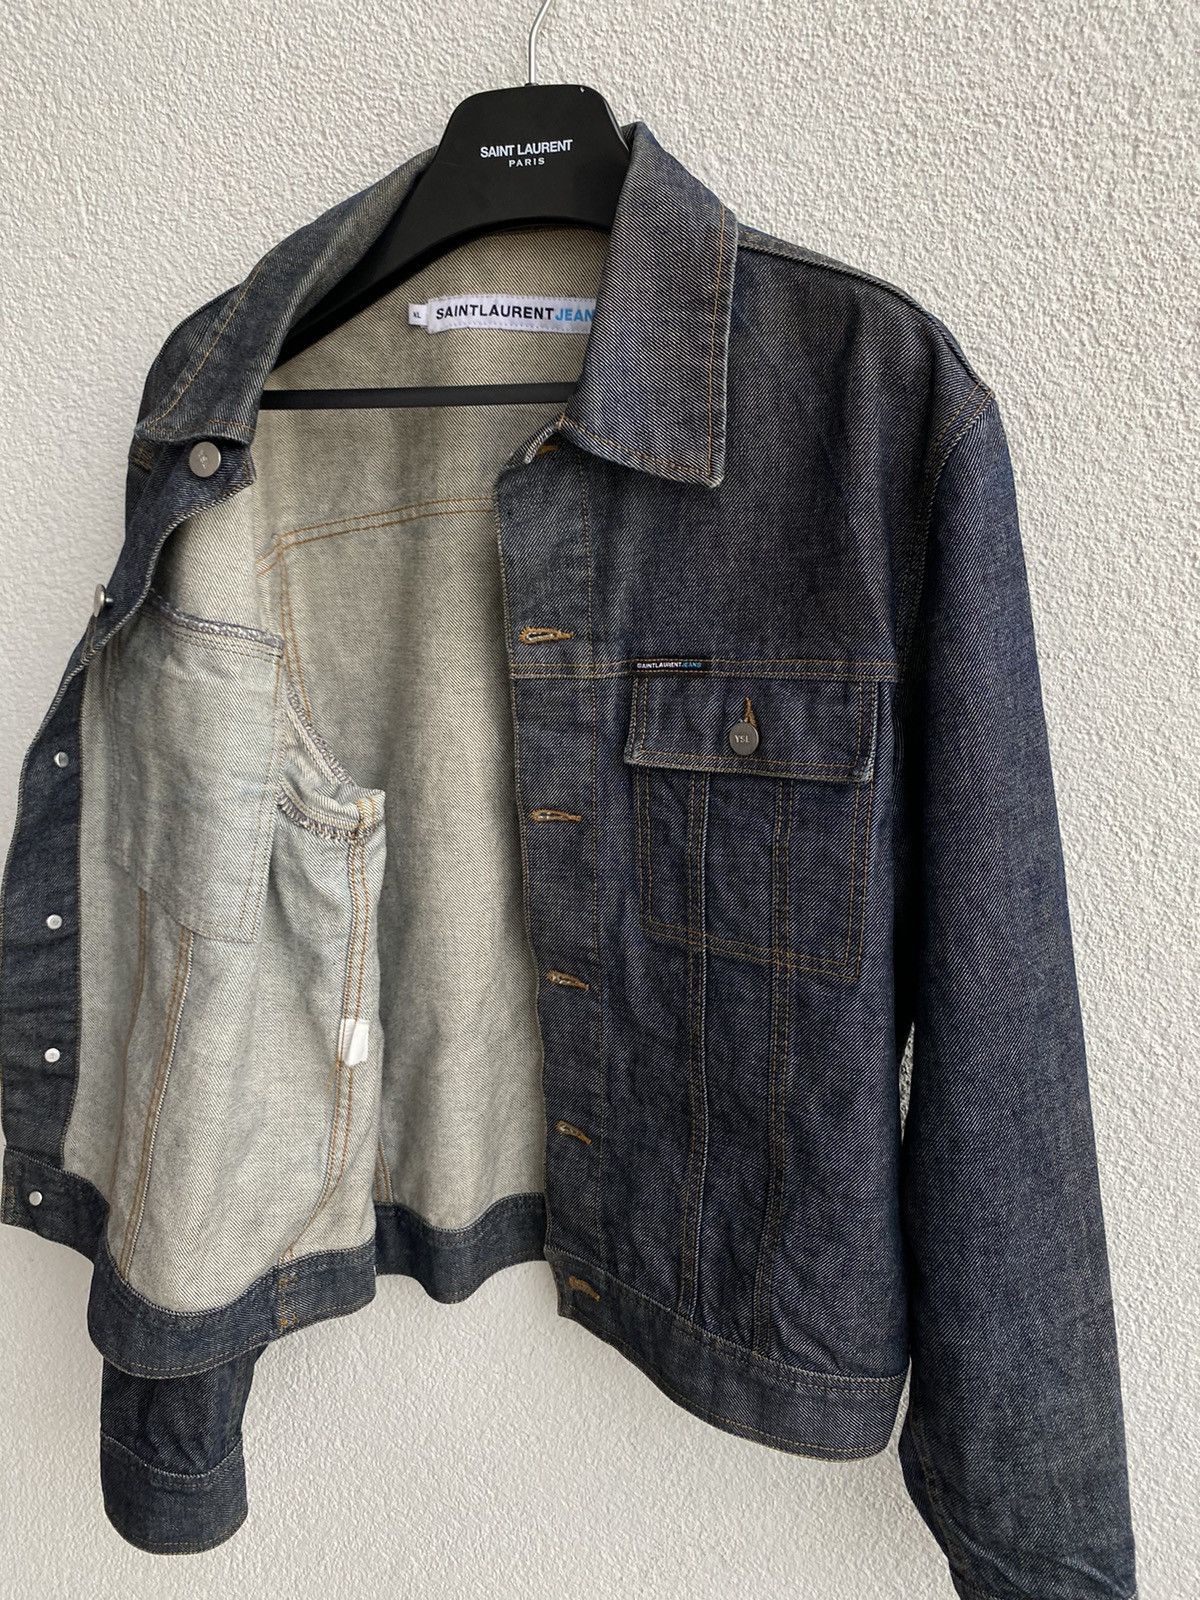 Vintage YSL Denim Jacket Trucker Saint Laurent Jeans | Grailed